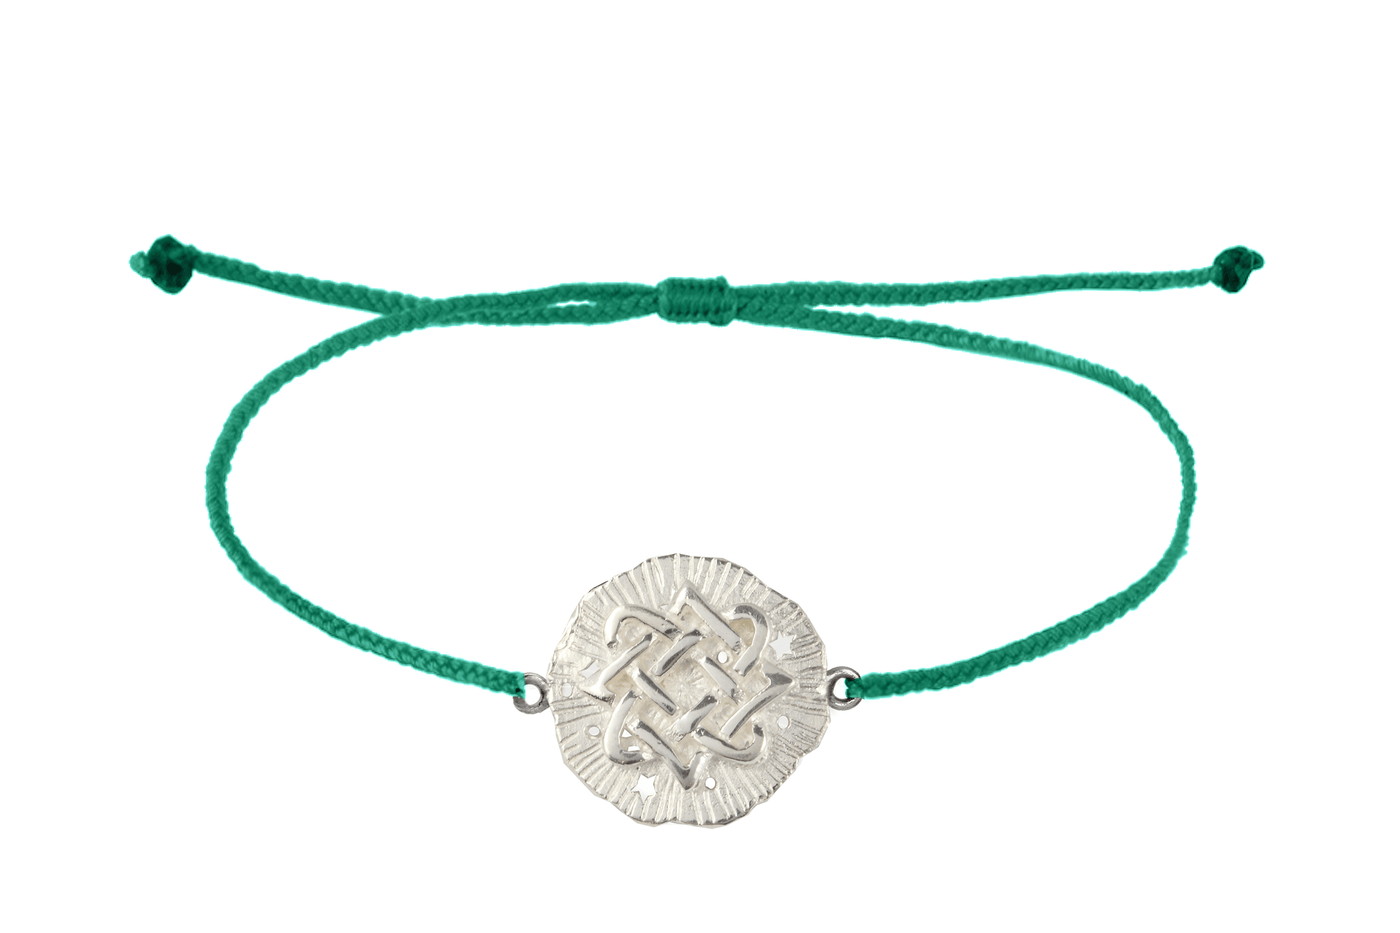 String bracelet with Lada medallion amulet. Silver